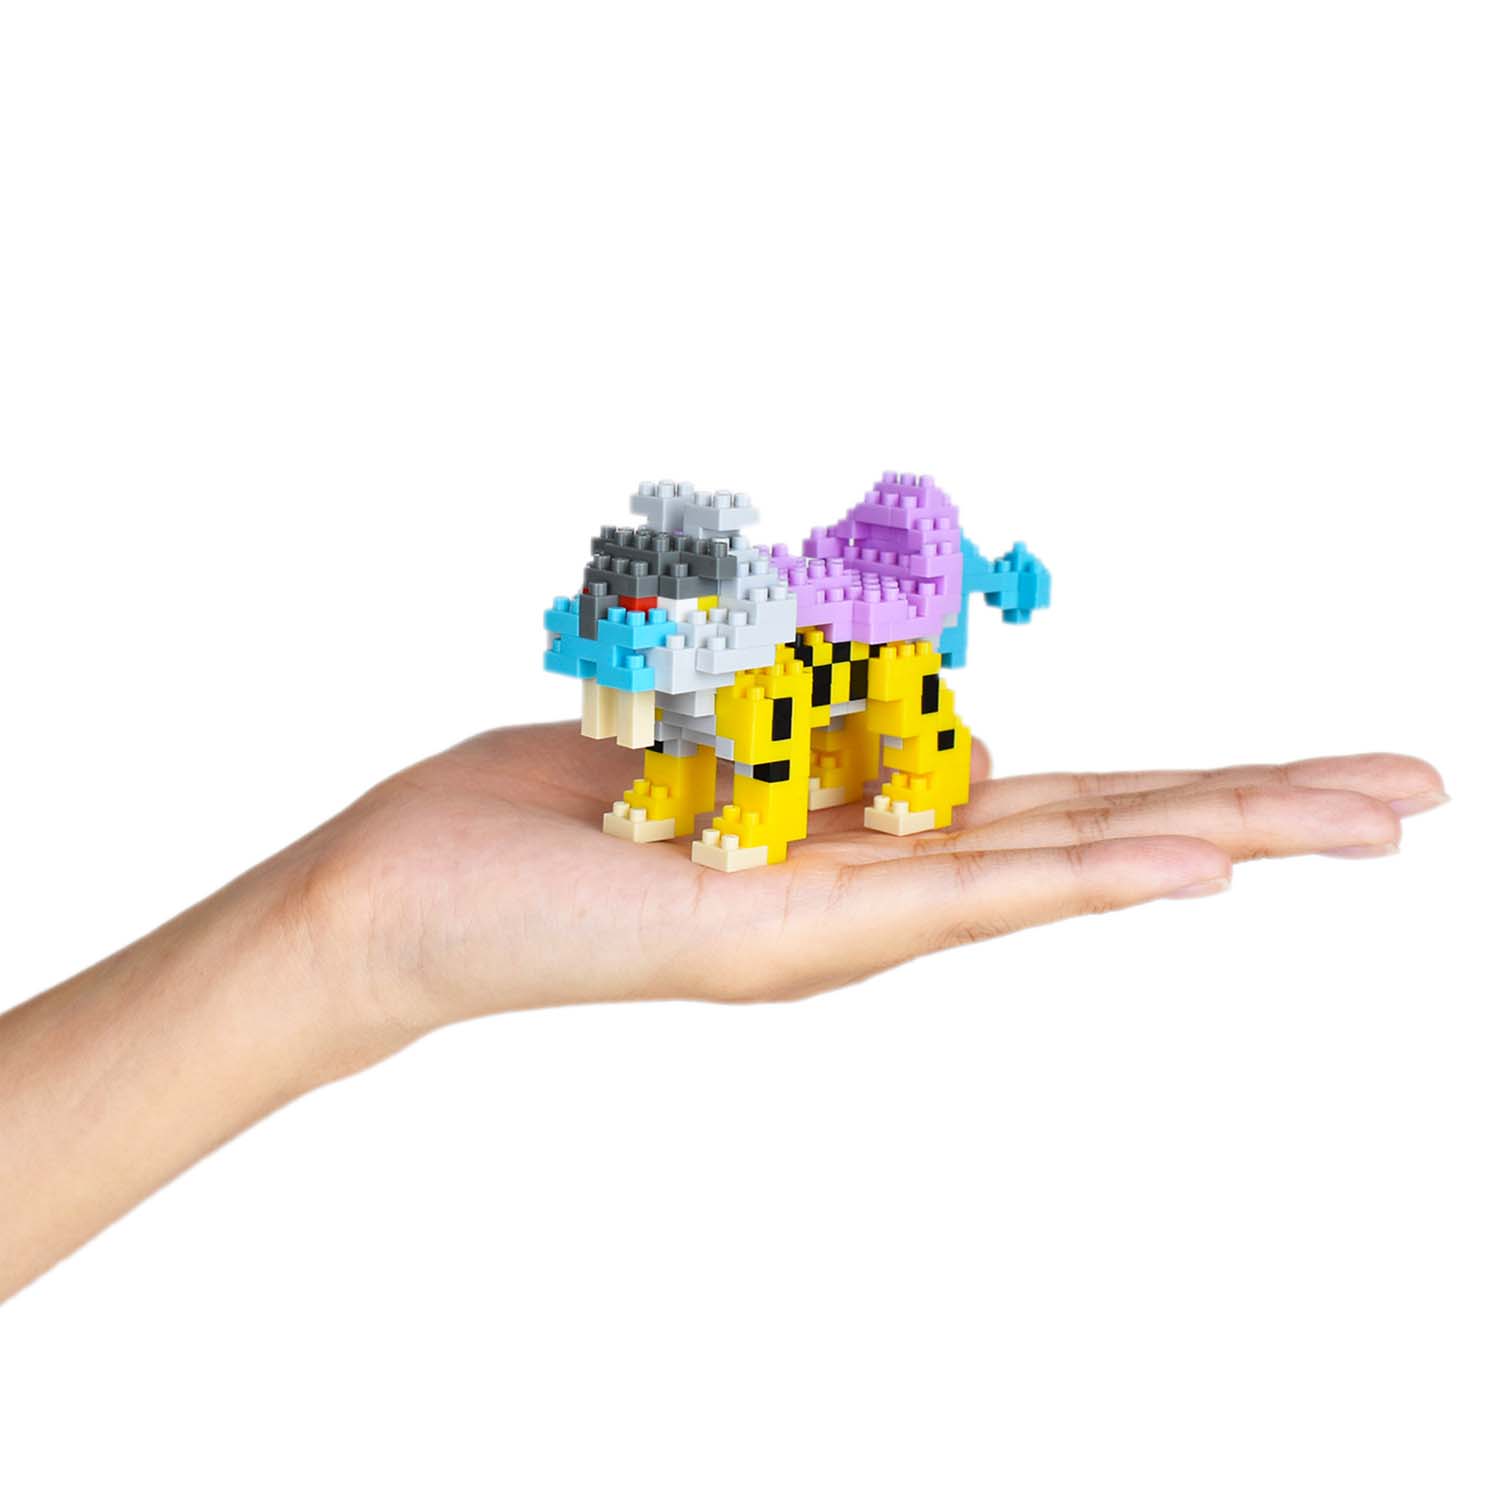 Raikou - Pokémon x nanoblock - NBPM-089 - Size